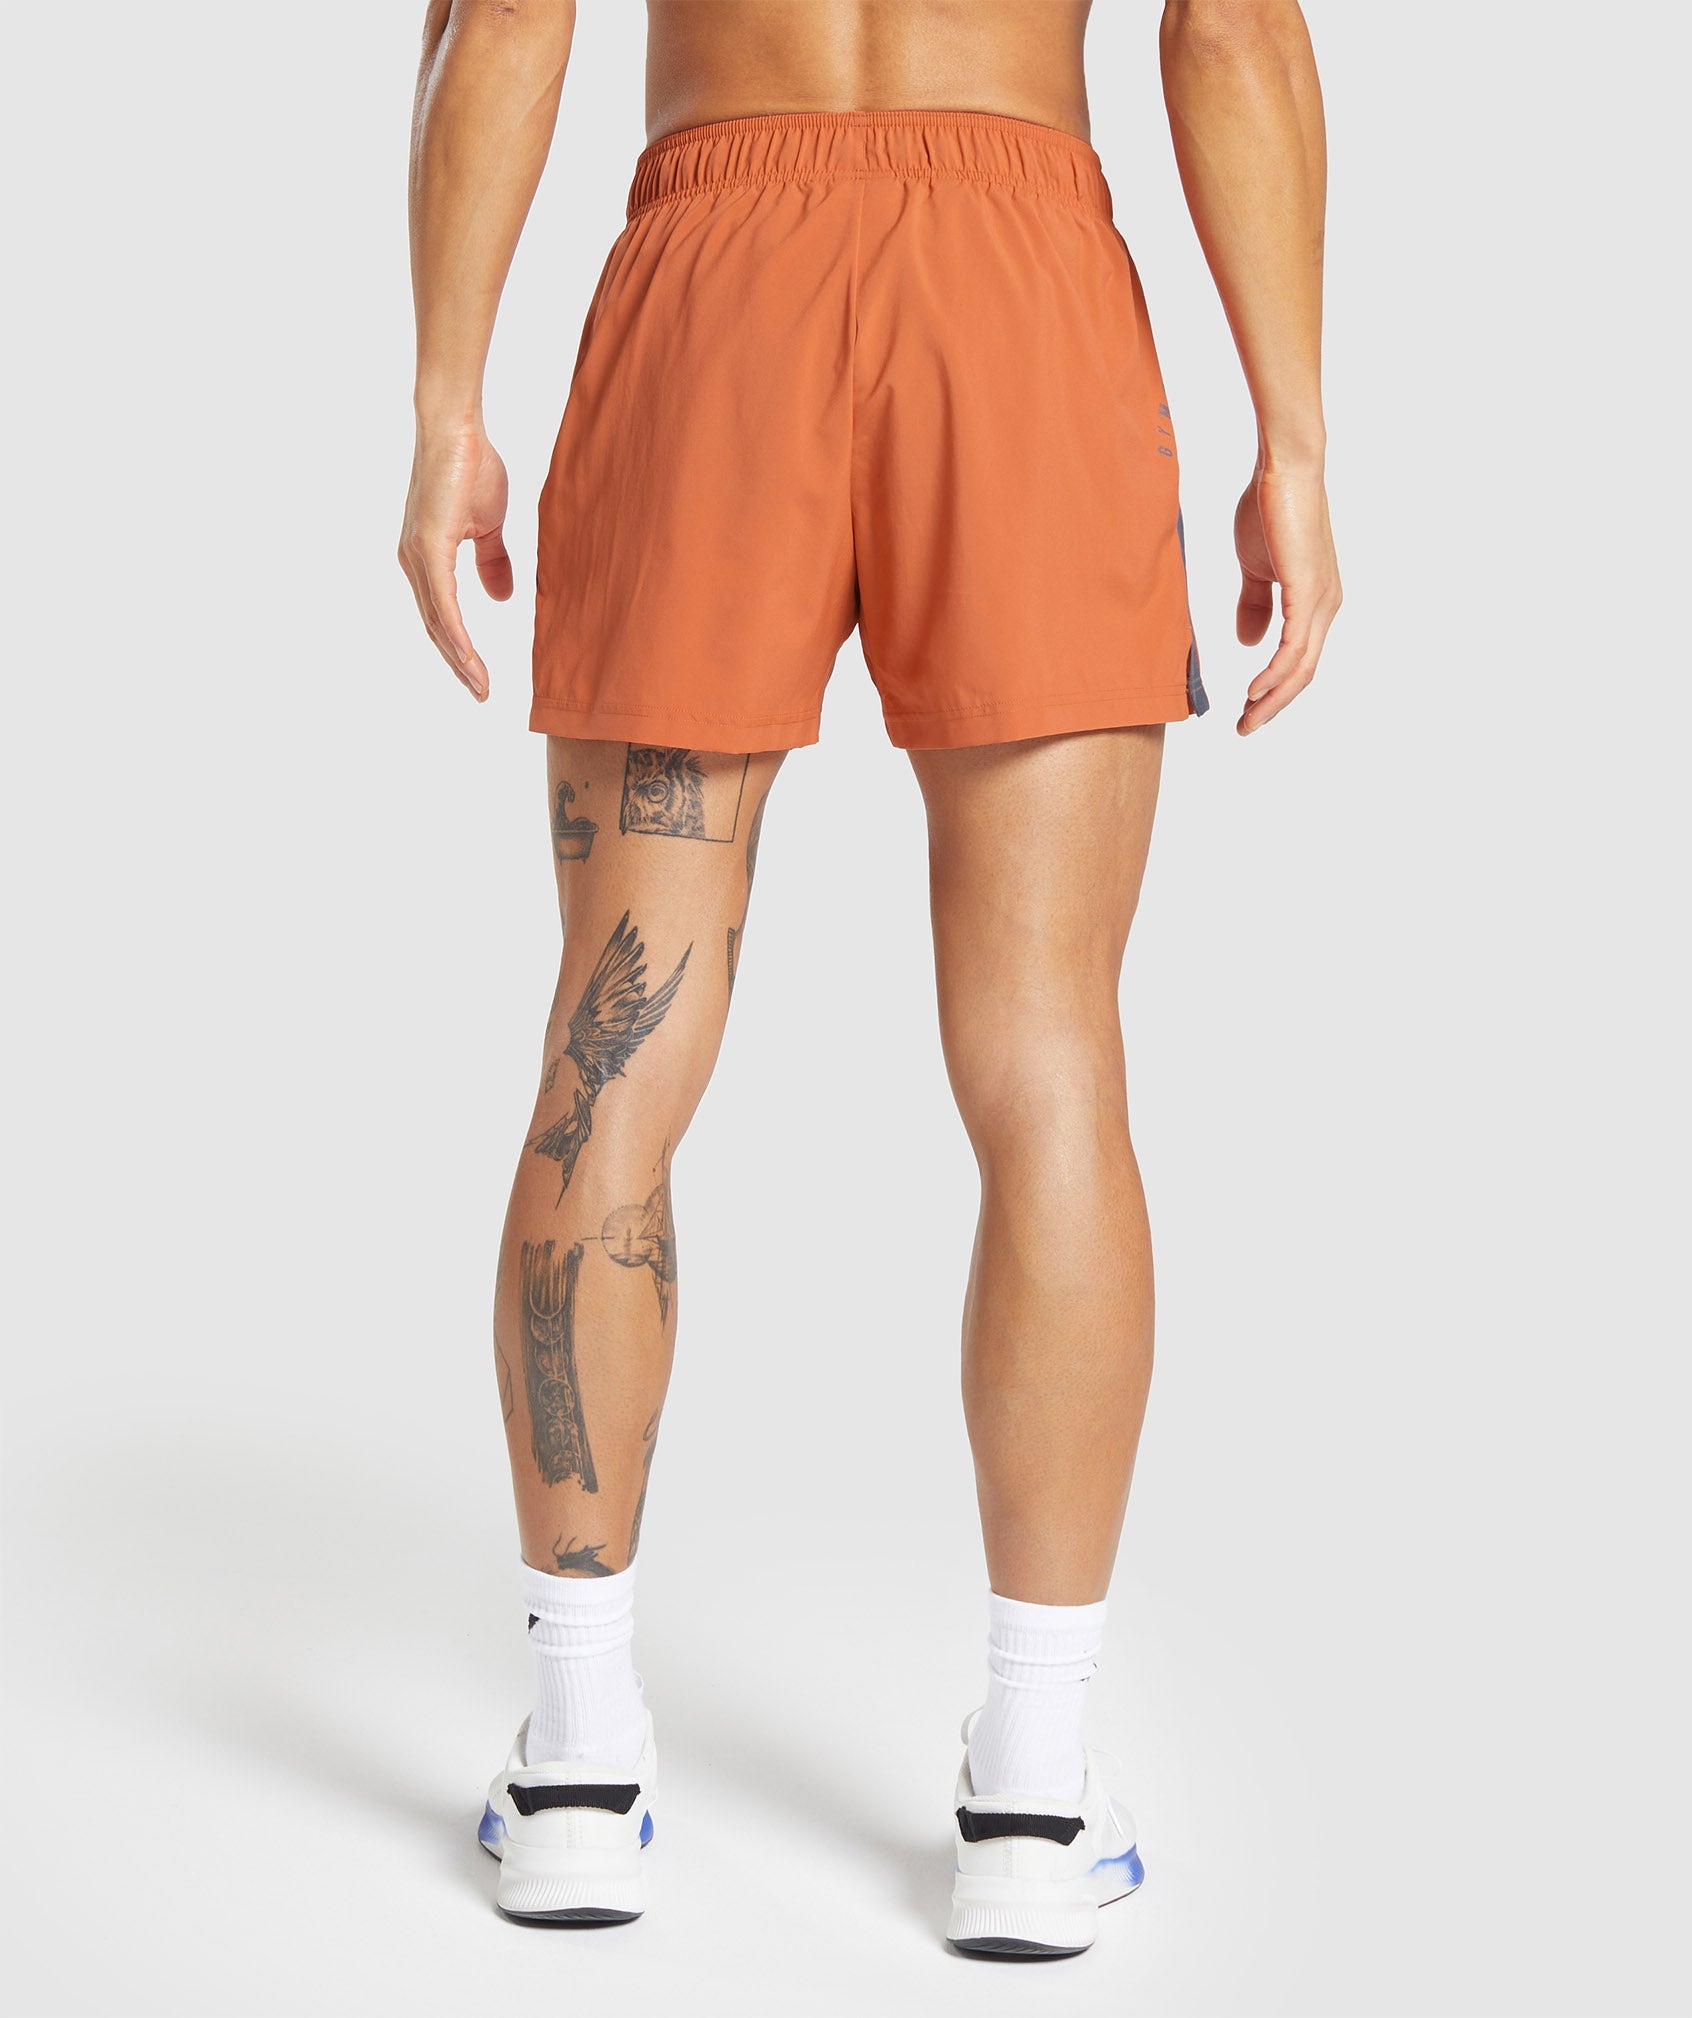 Sport 5" Shorts in Muted Orange/Titanium Blue - view 2